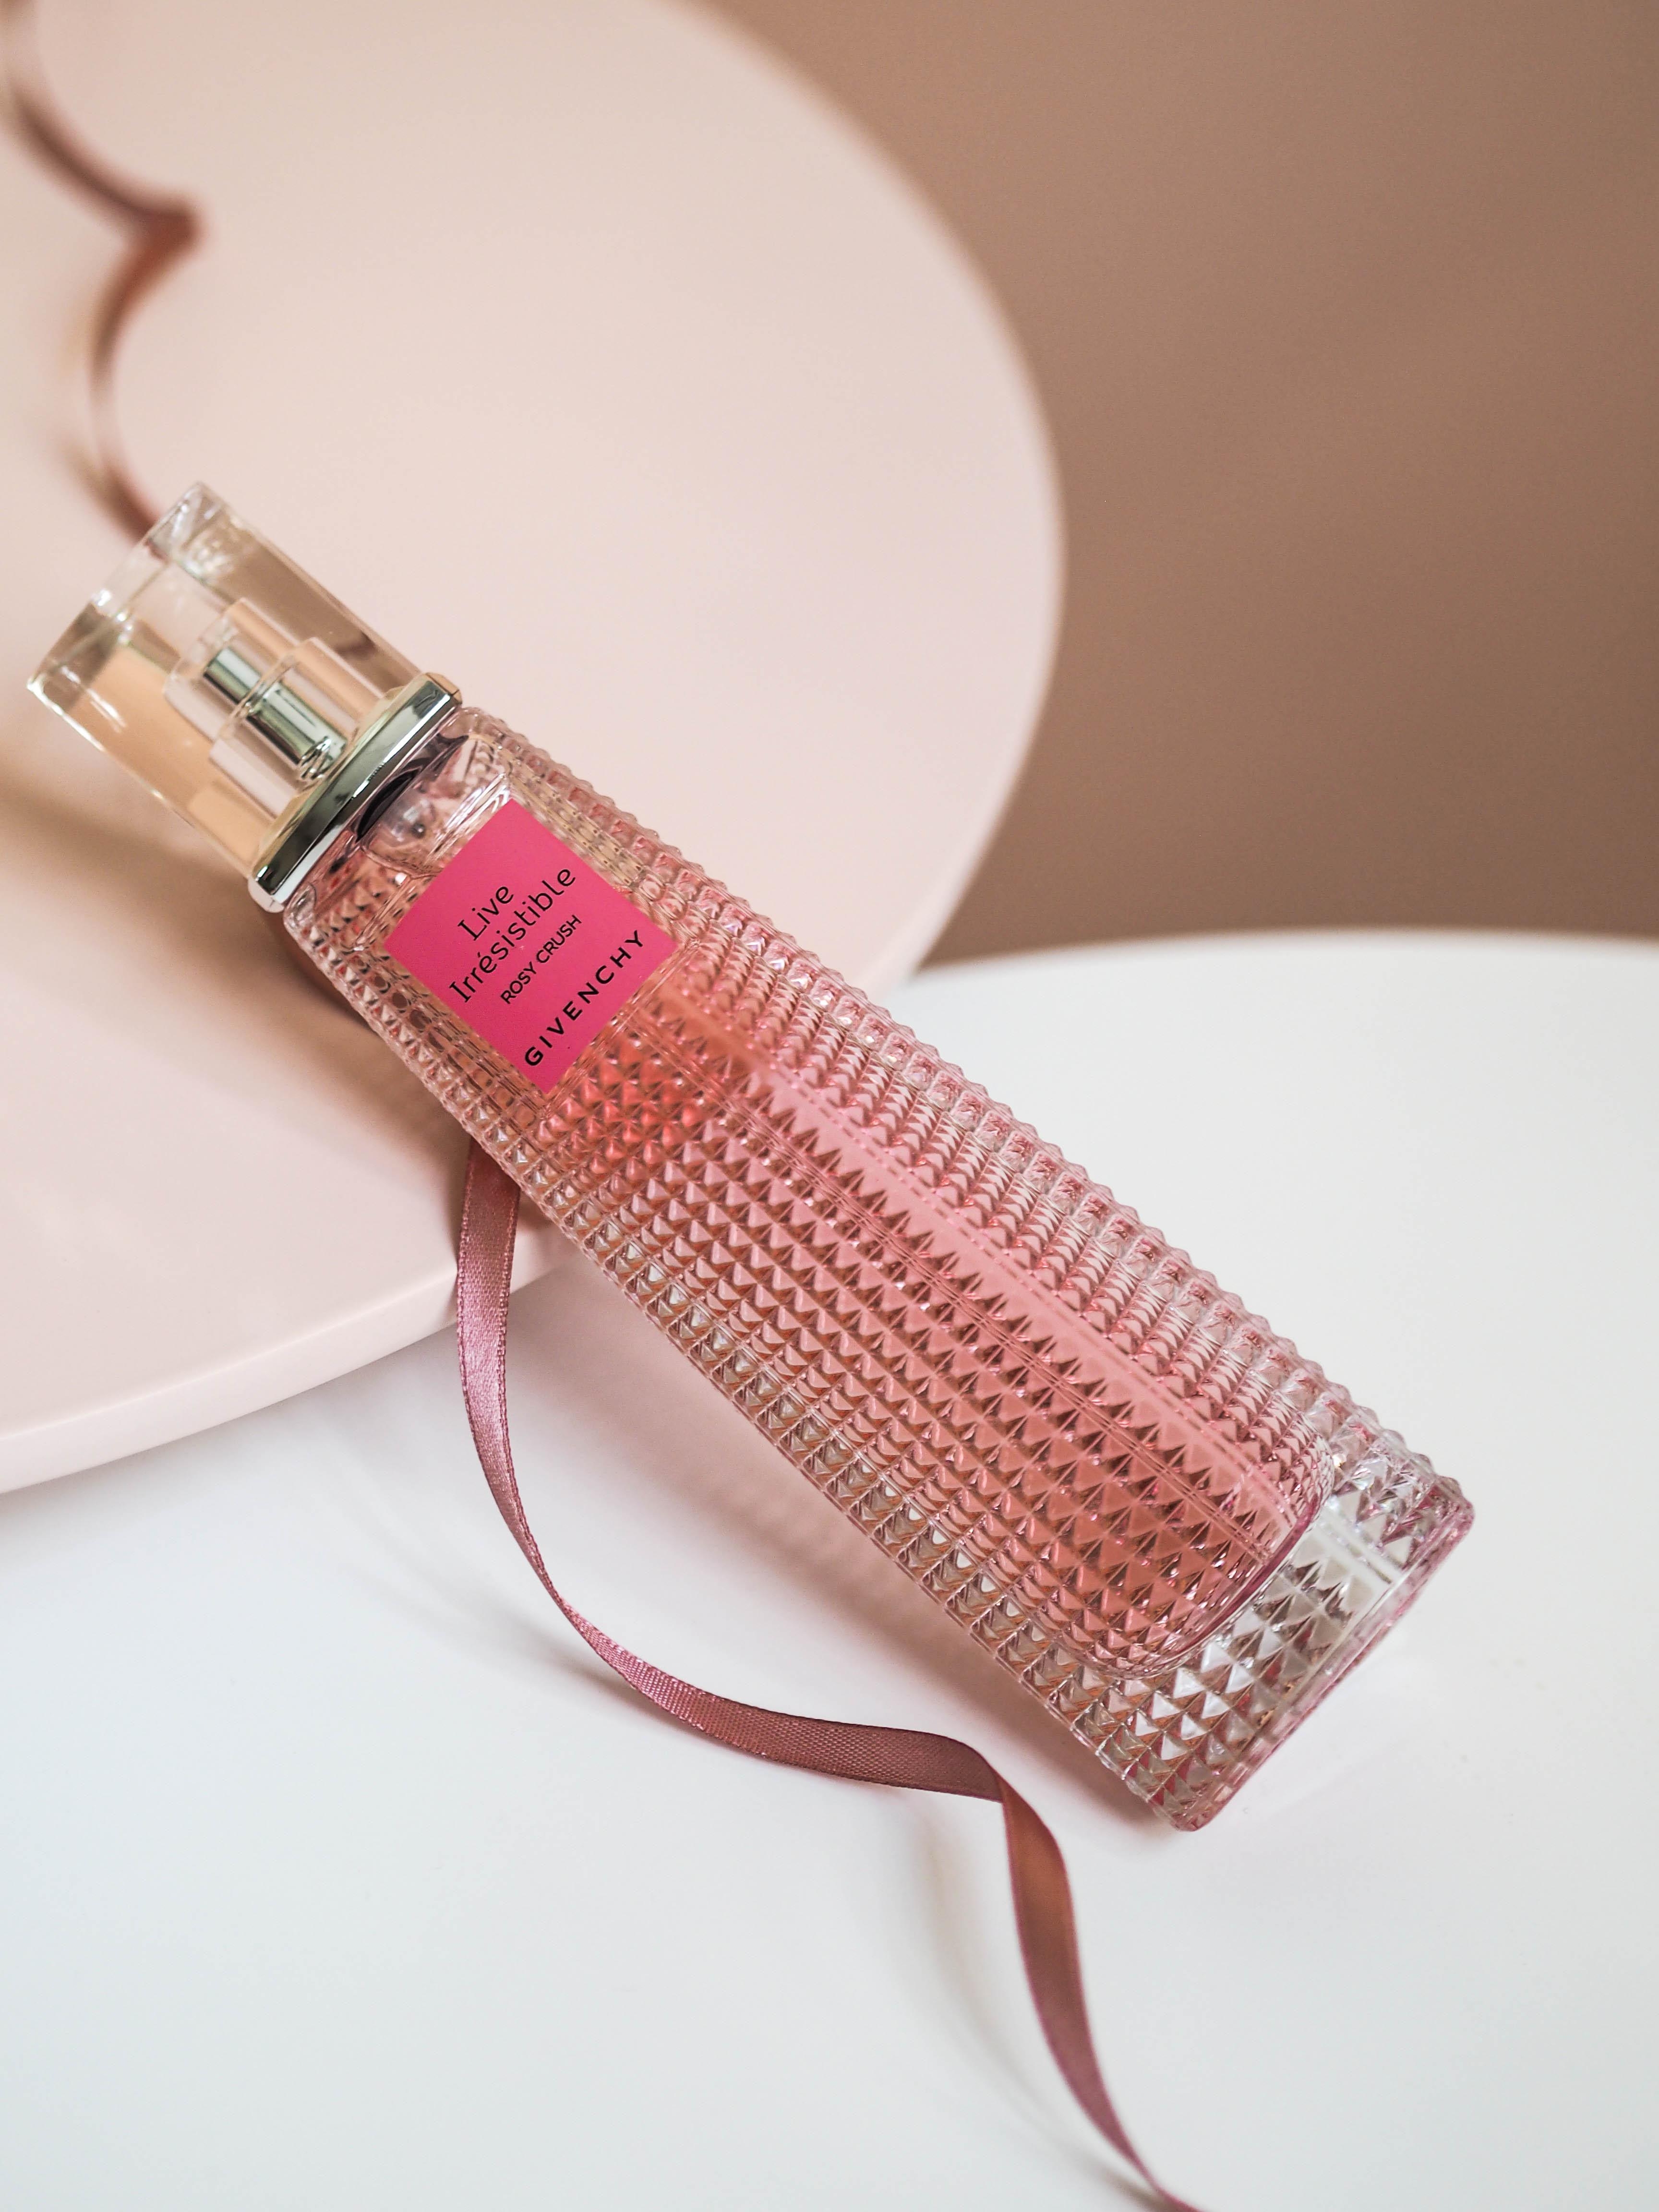 Unwiderstehlich: Givenchys Live Irrésistible Rosy Crush mit Goji-Beere #beautylieblinge #givenchybeauty #parfum